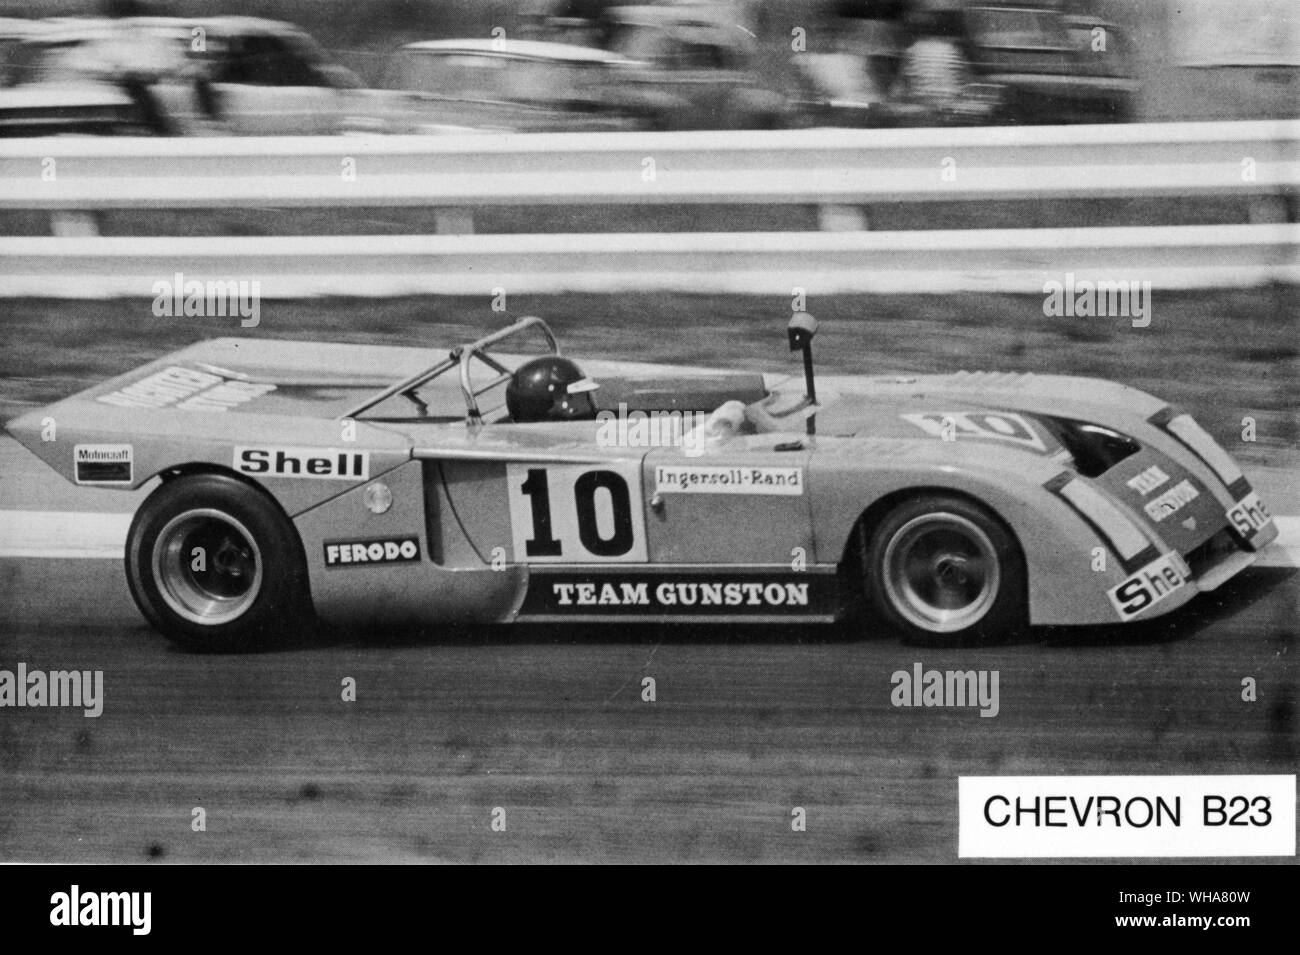 1973 Chevron B23 2 liter Sports Racing Car Stockfoto